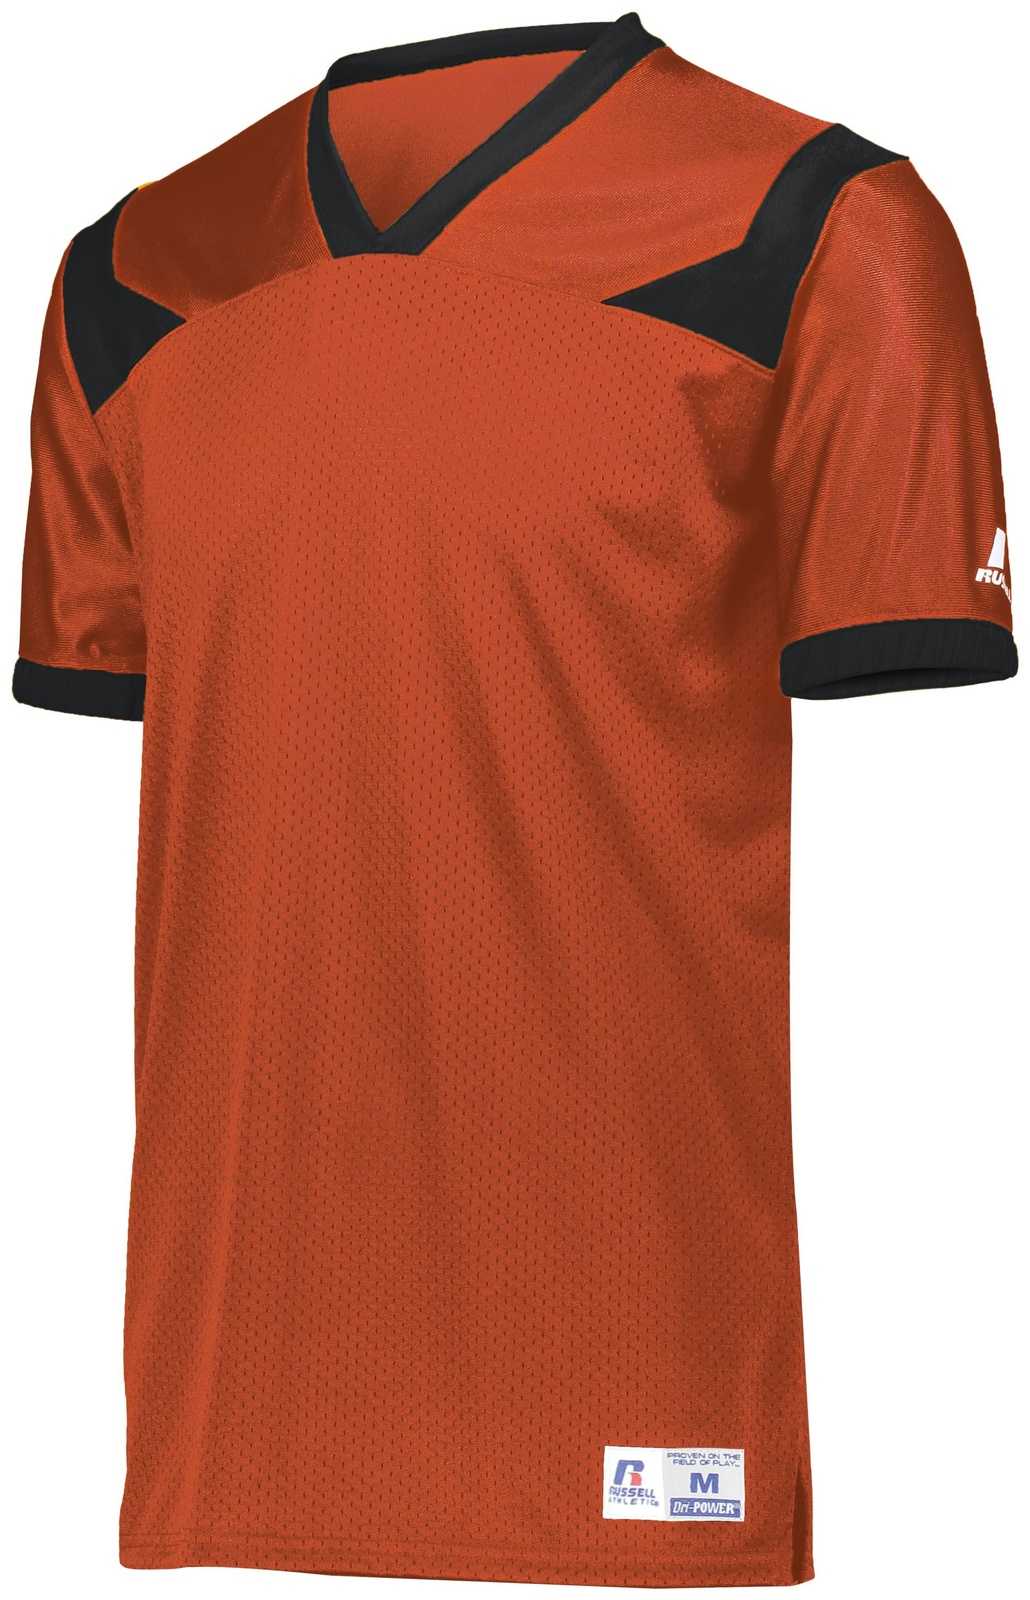 Russell R0493M Phenom6 Flag Football Jersey - Burnt Orange Black - HIT a Double